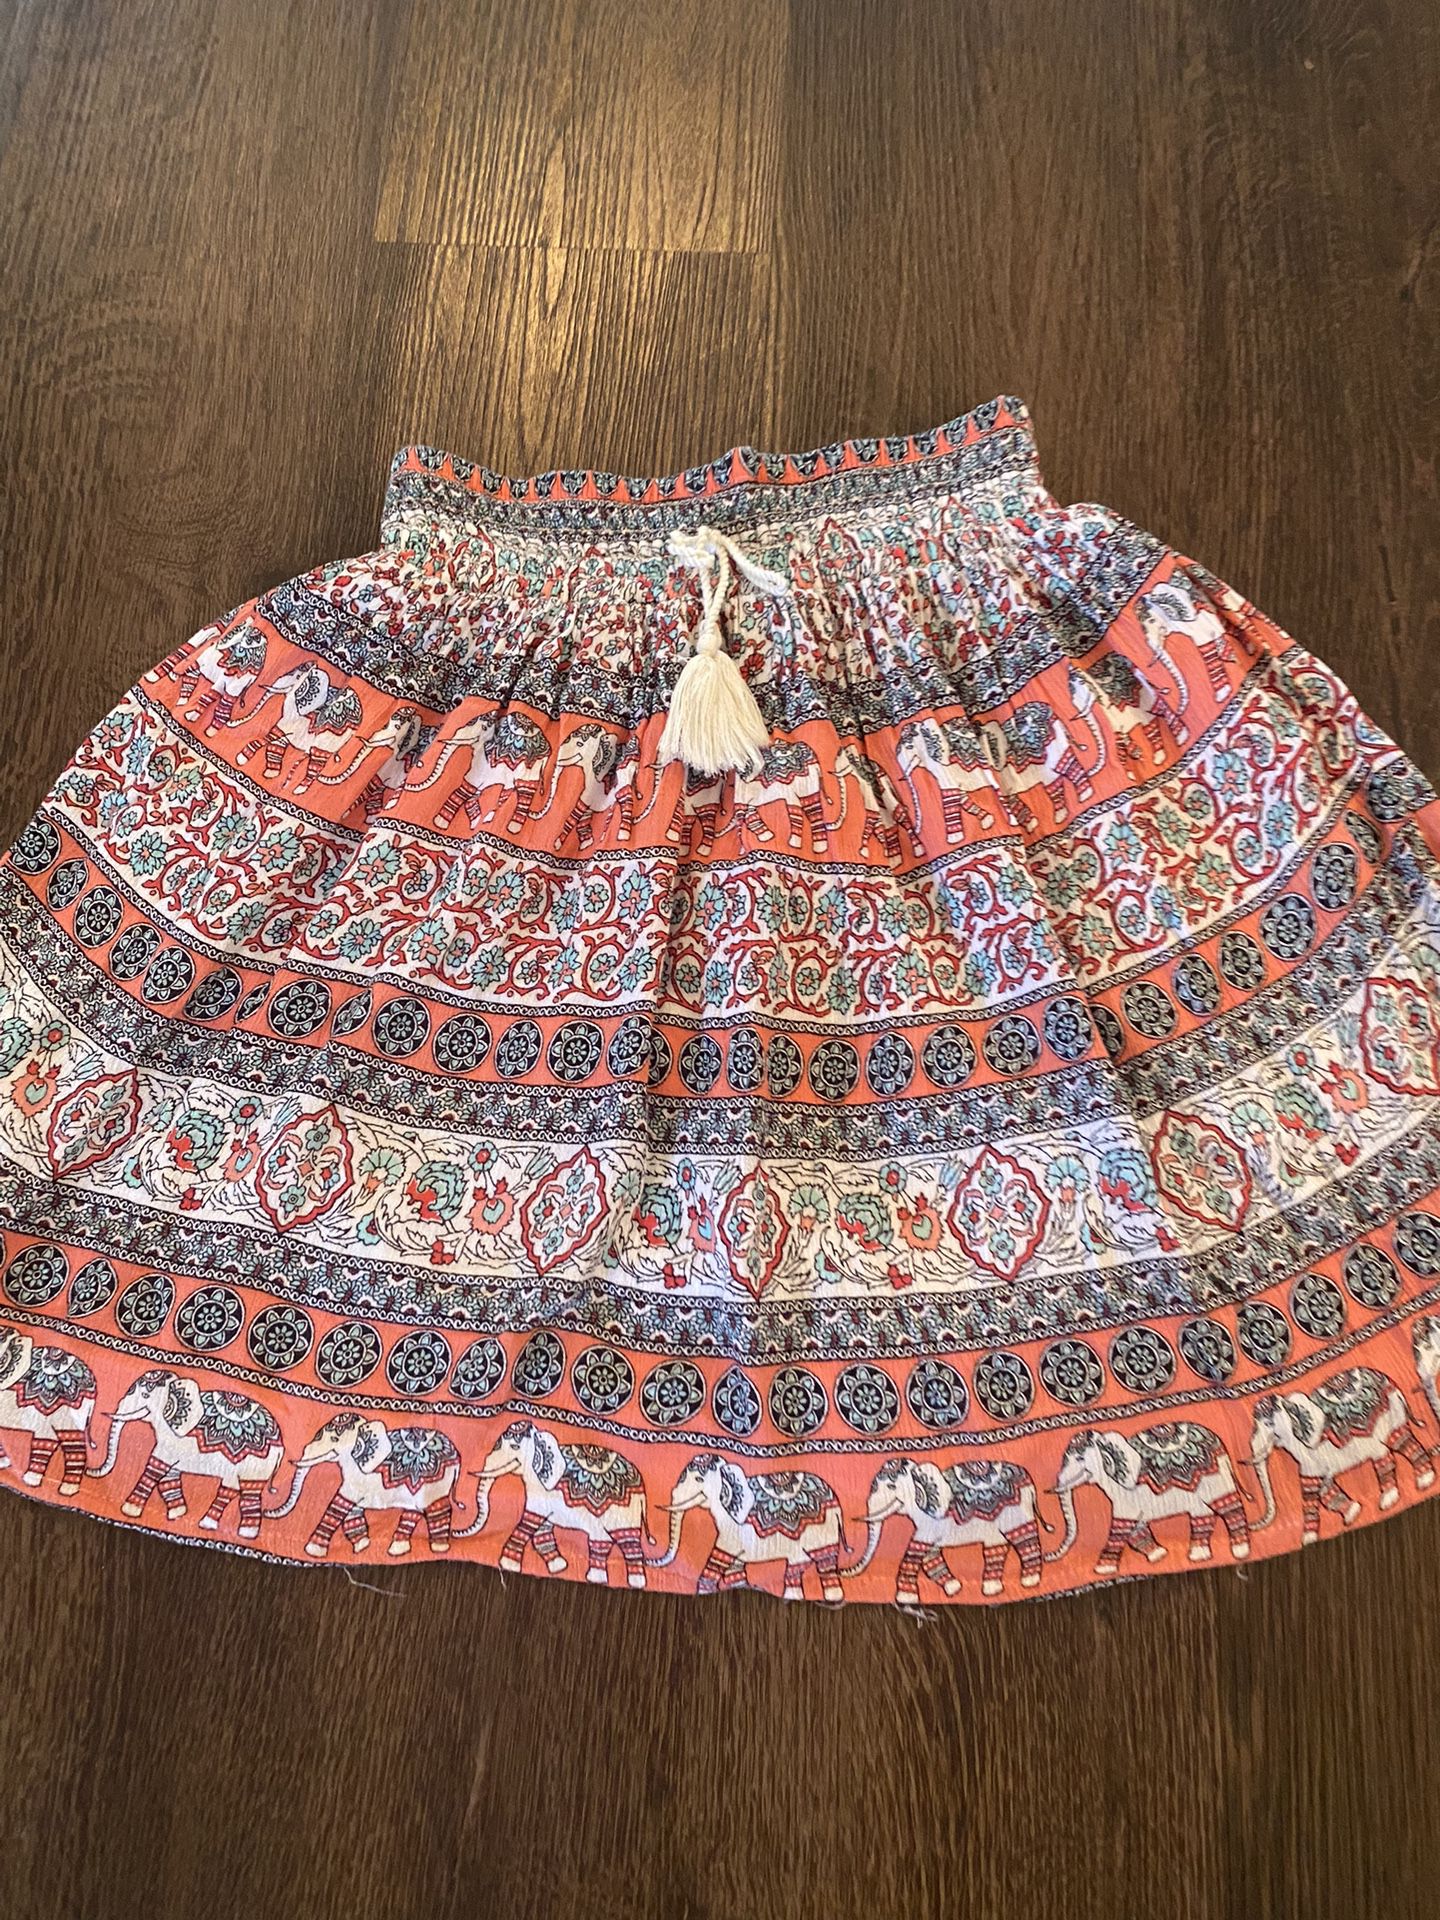 Girls Elephant Skirt Size 10/12 By Speechless #18